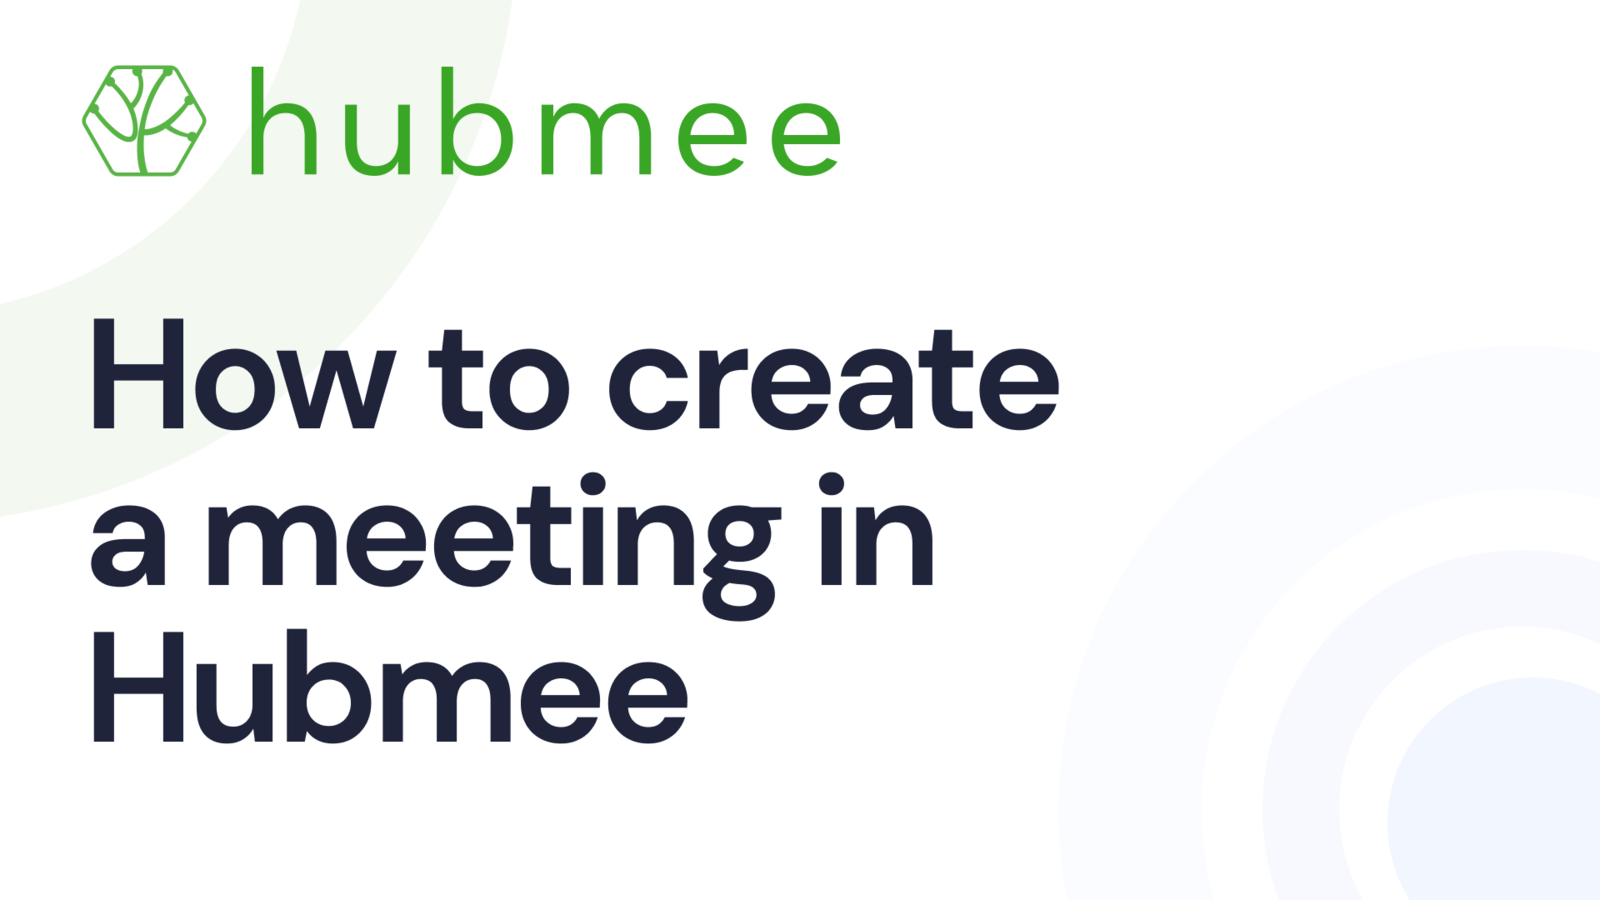 How to create a meeting in Hubmee